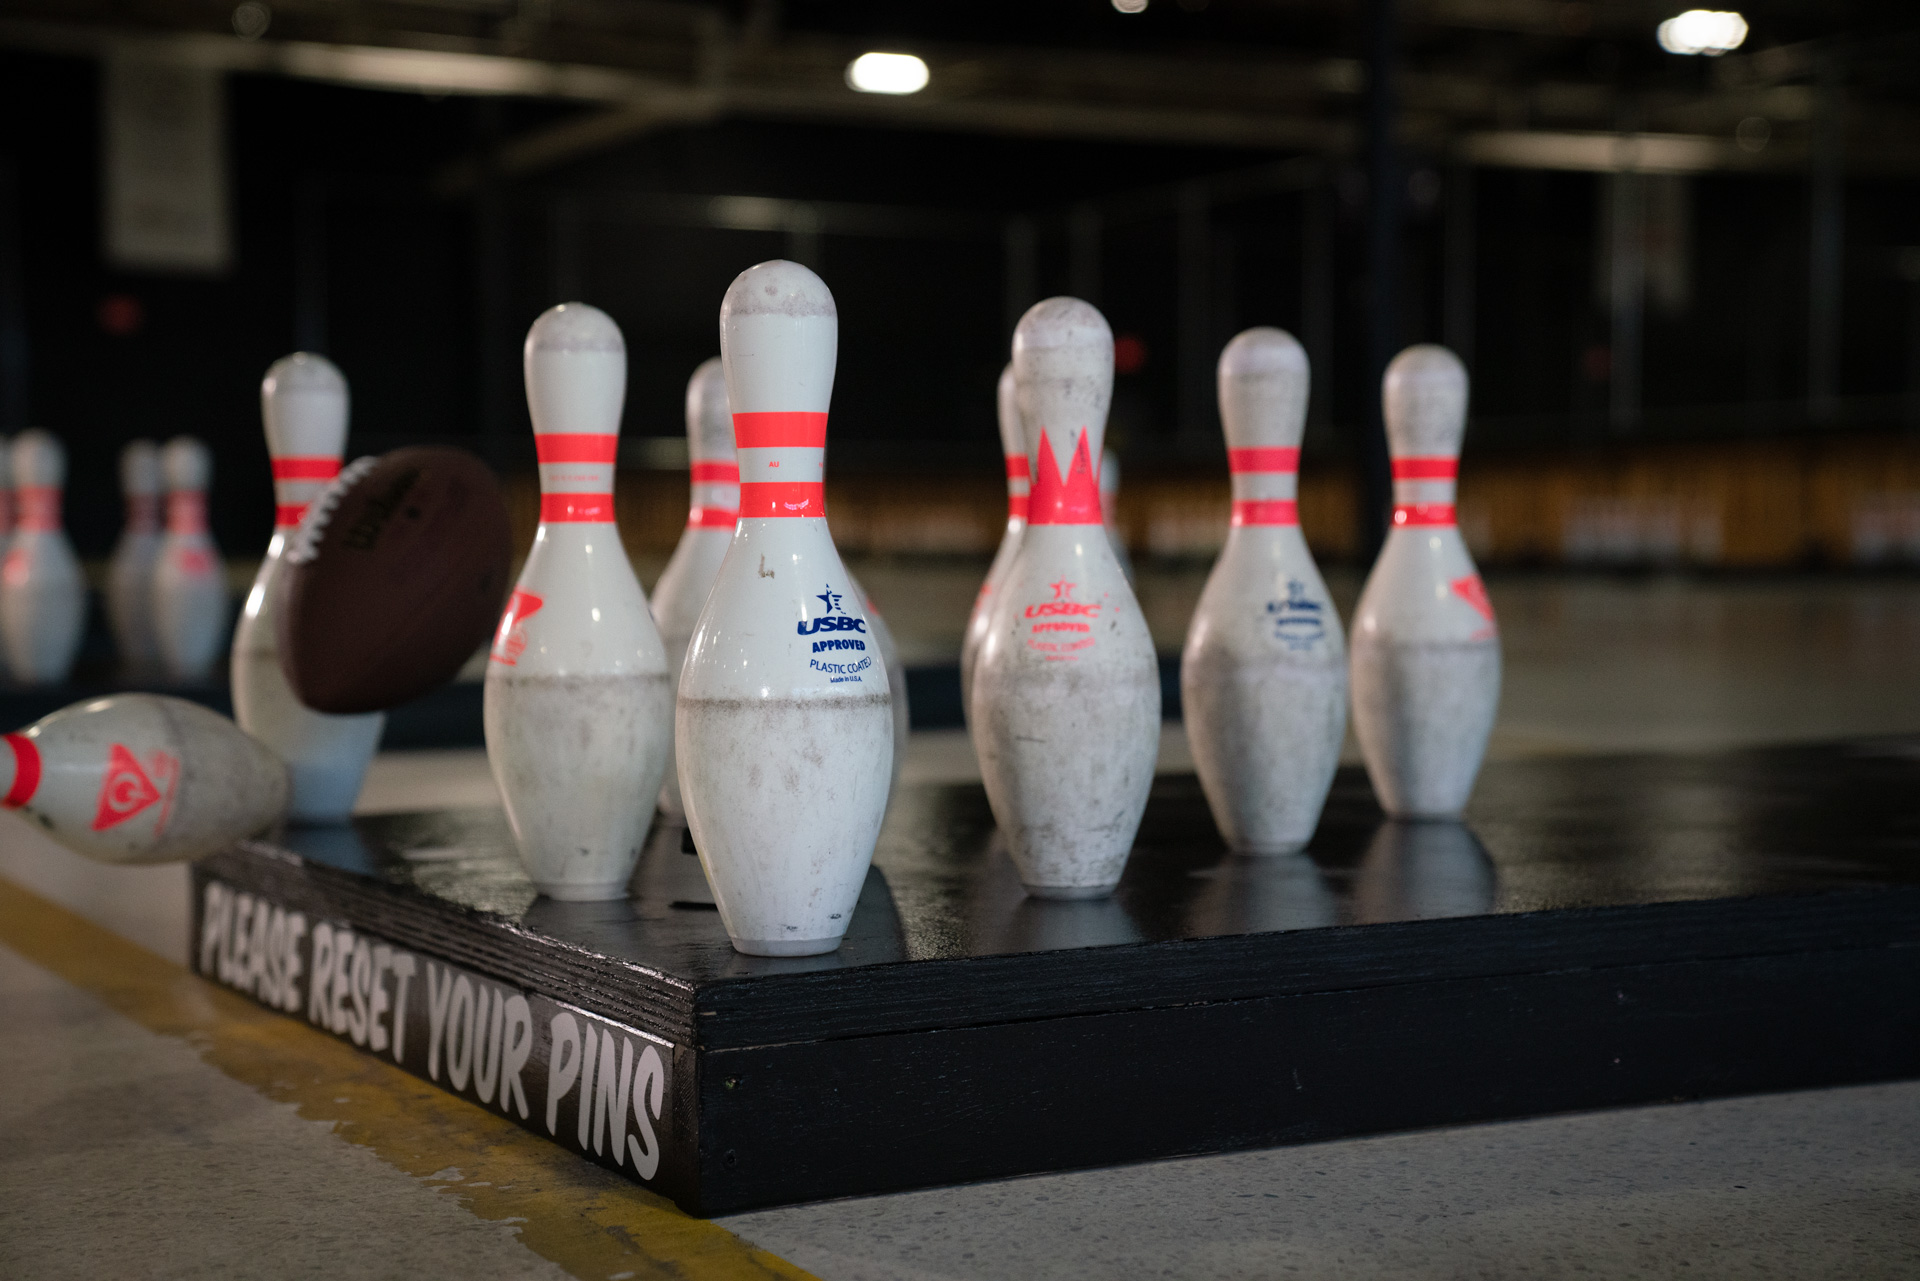 Football hitting bowling pins set up on a platform